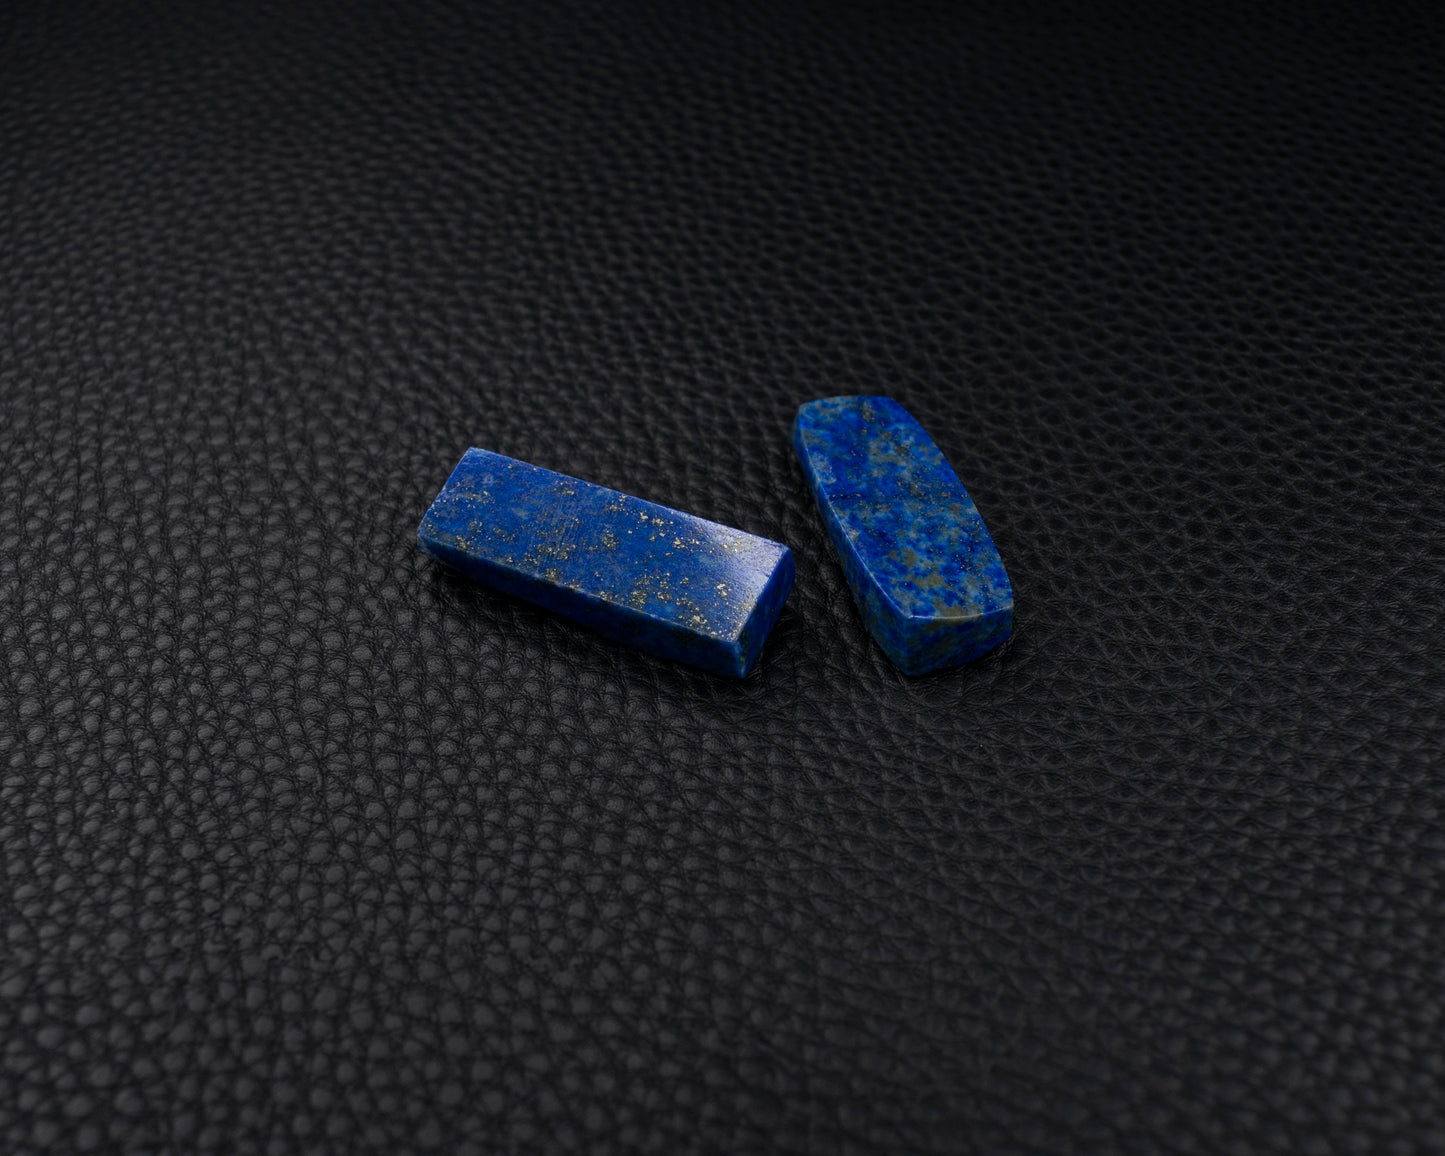 Custom Order with Lapis Lazuli